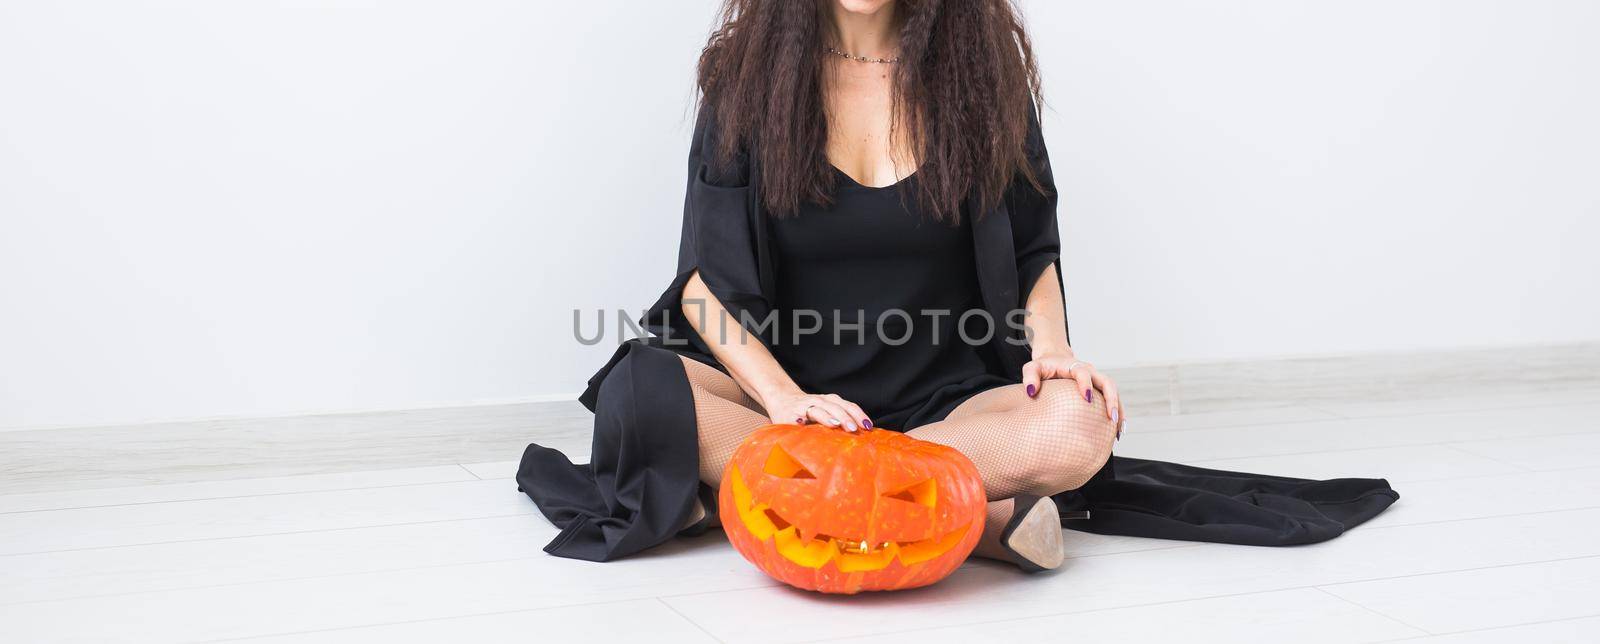 Halloween and masquerade concept - Beautiful young woman posing with Pumpkin Jack-o'-lantern.